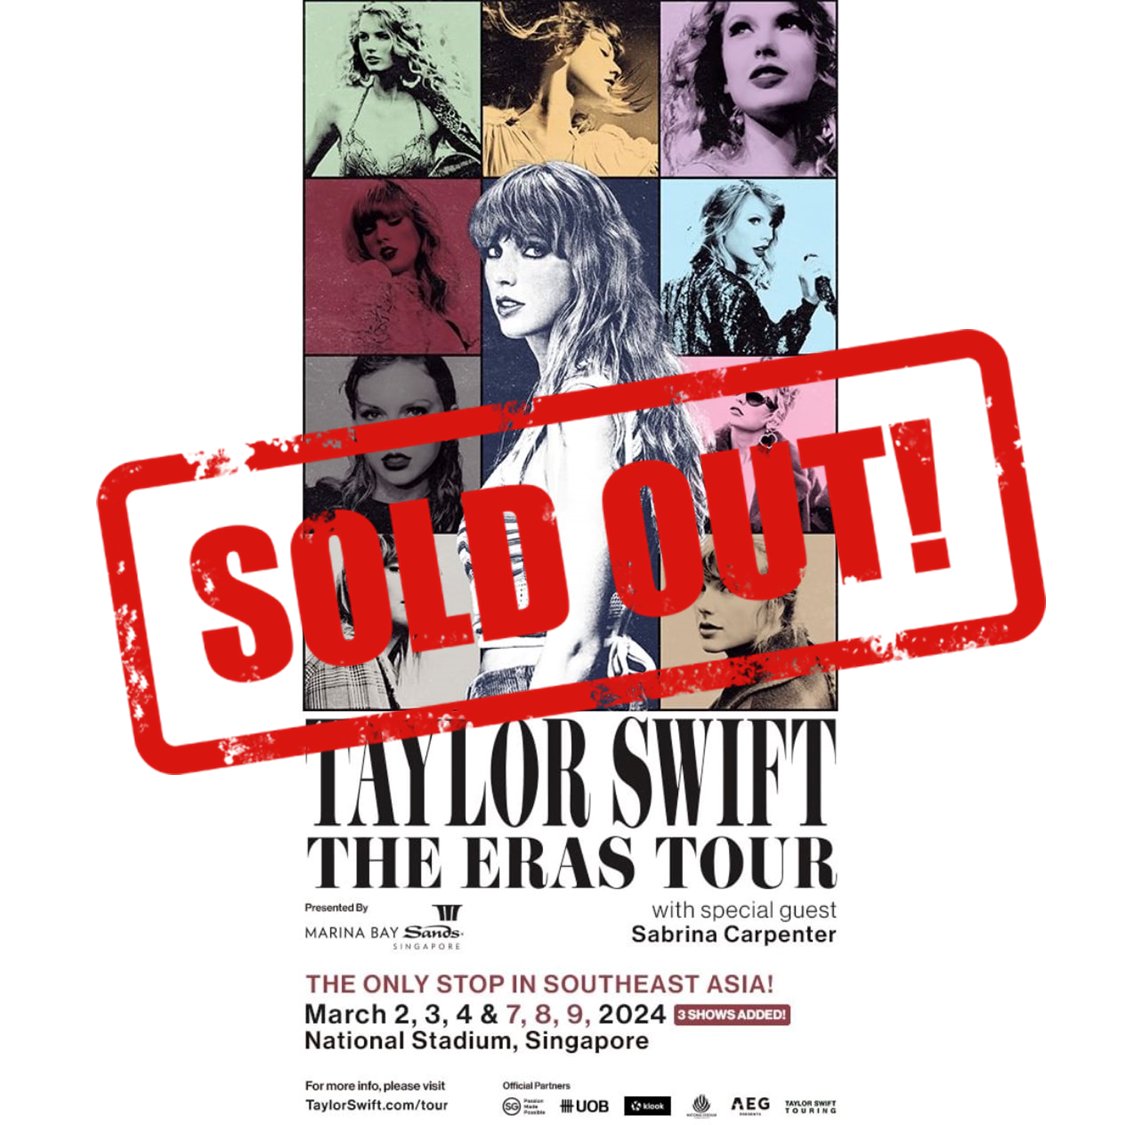 The eras tour poster